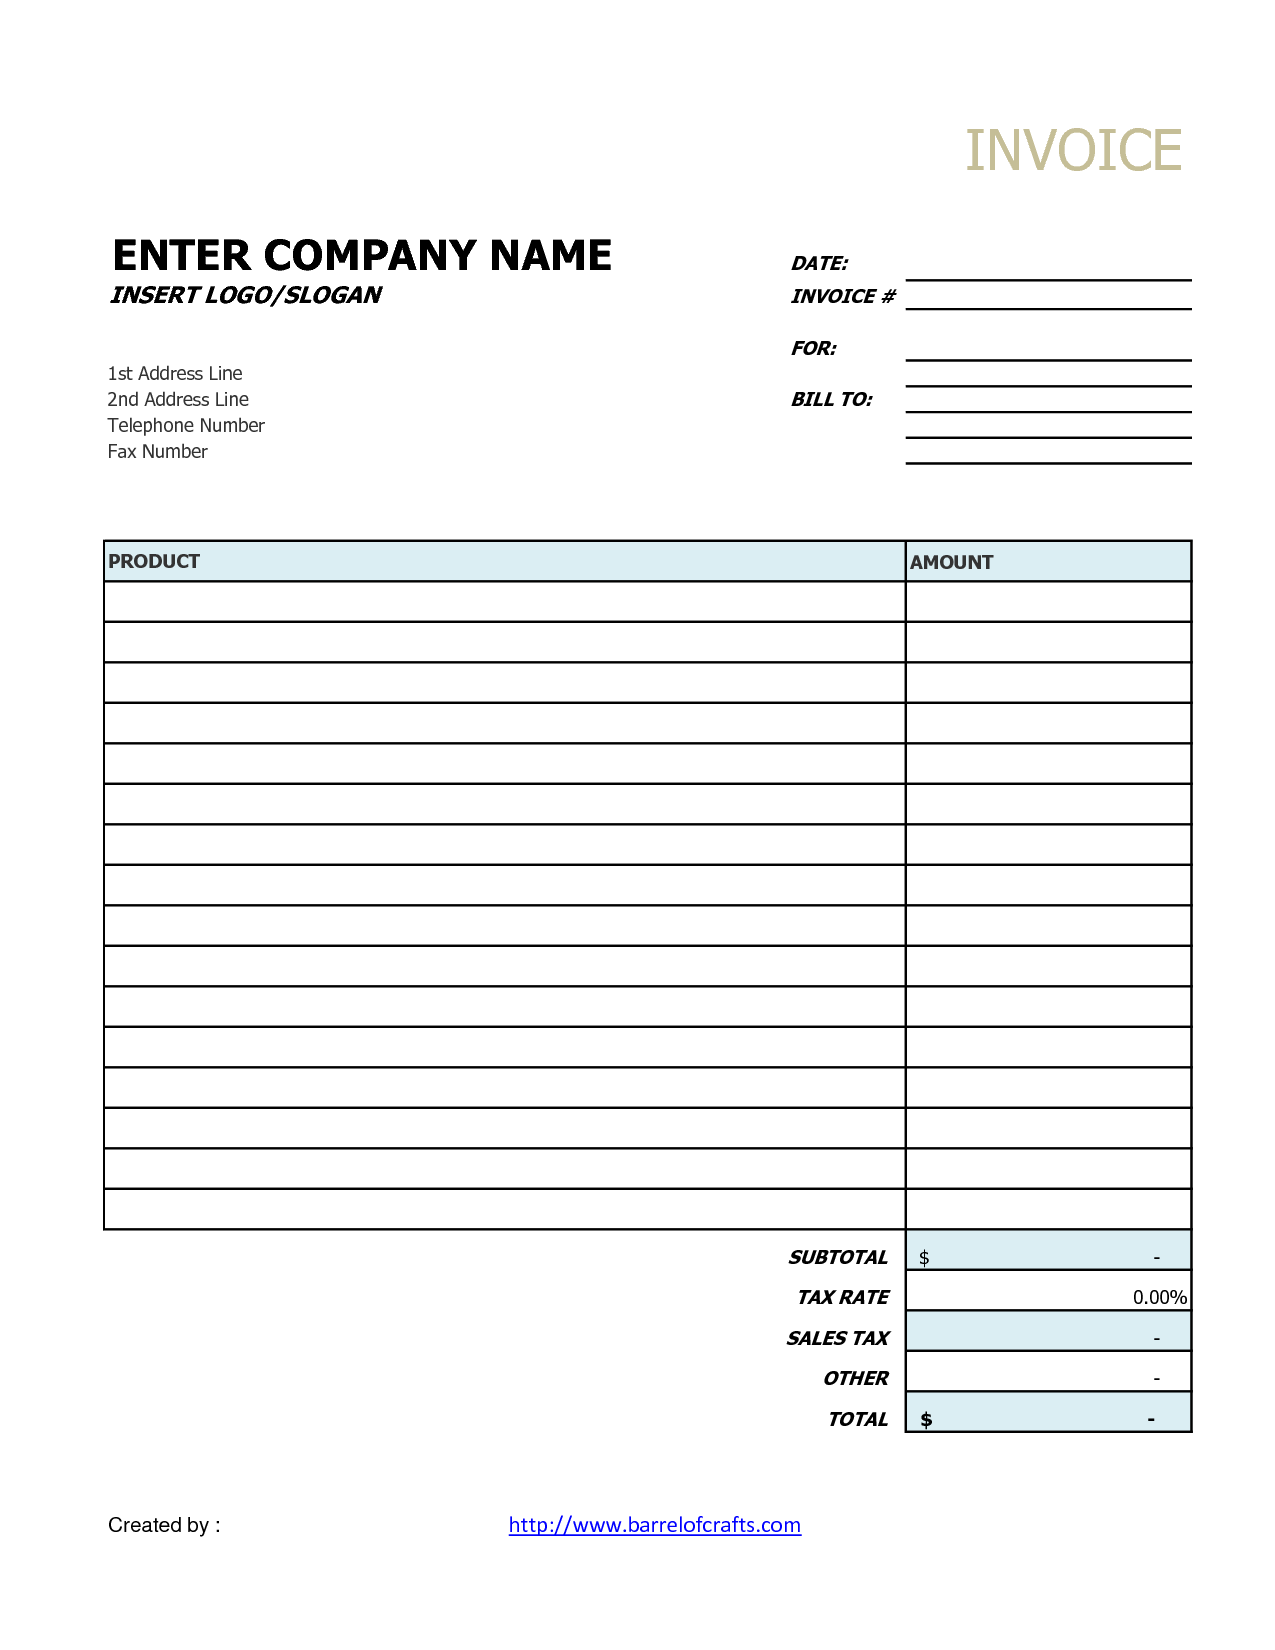 generic-invoice-template-invoice-example